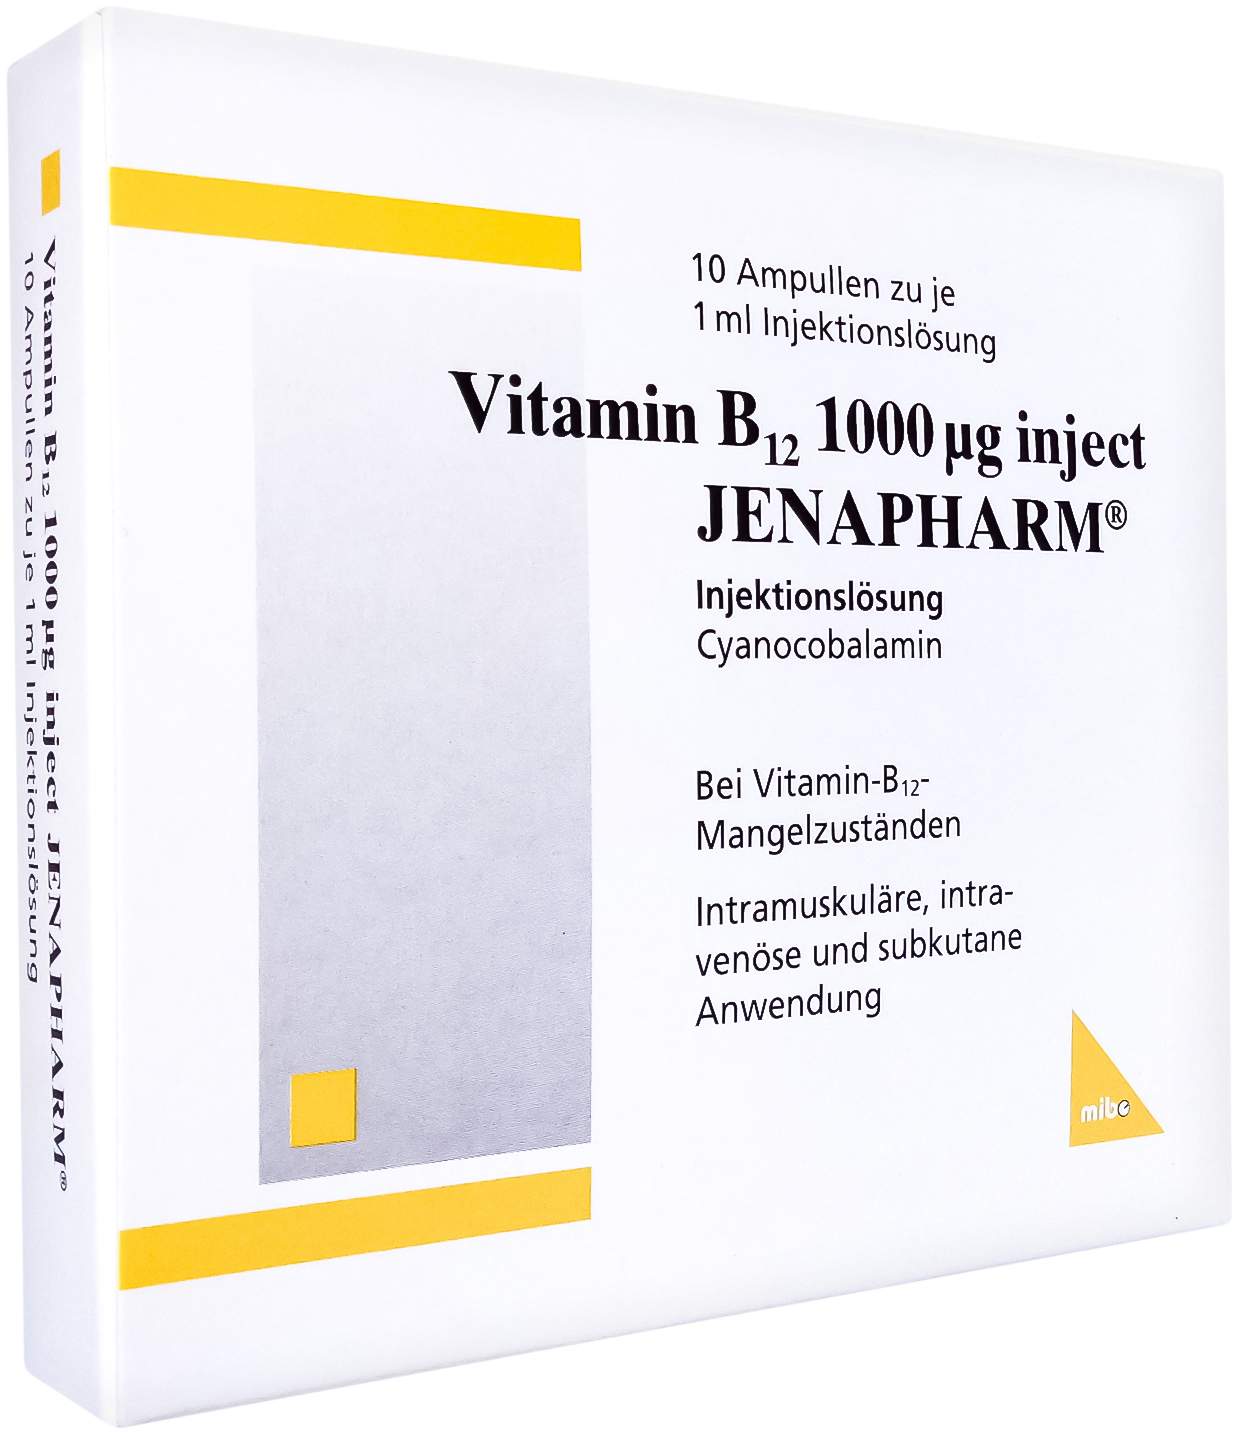 Vitamin B12 1000 Myg Inject Jenapharm 10 X 1 ml Ampullen kaufen